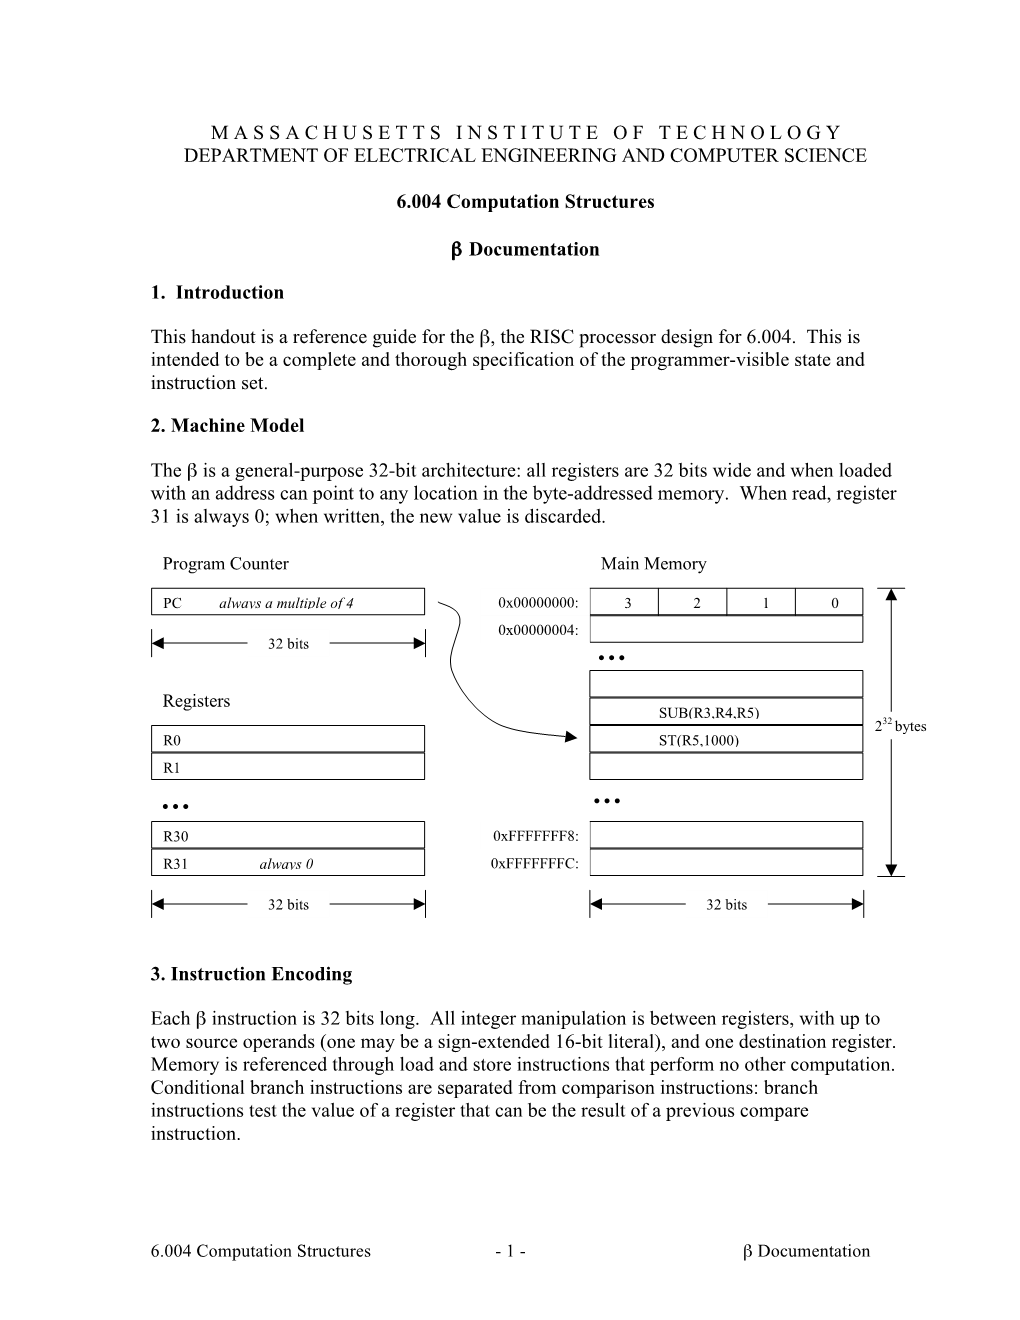 Beta Documentation (PDF)